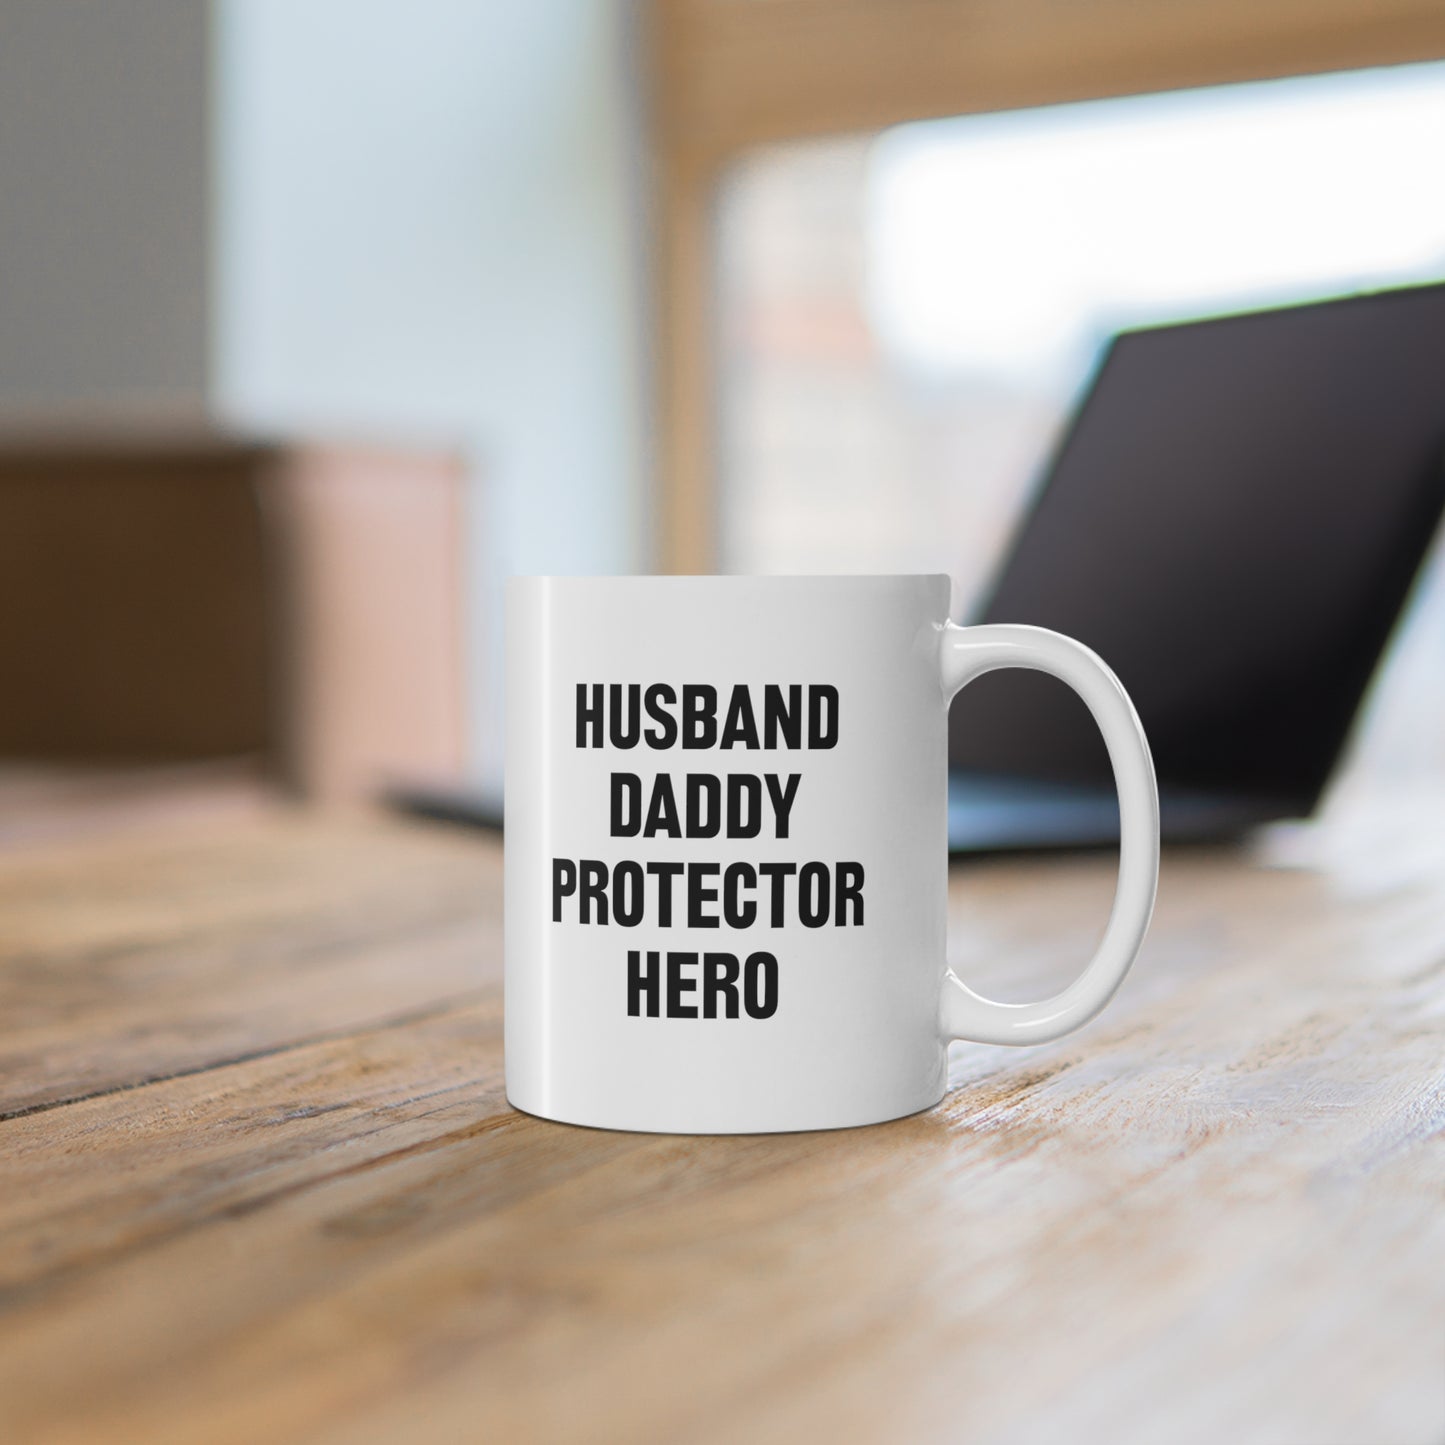 11oz ceramic mug with quote Husband Daddy Protector Hero